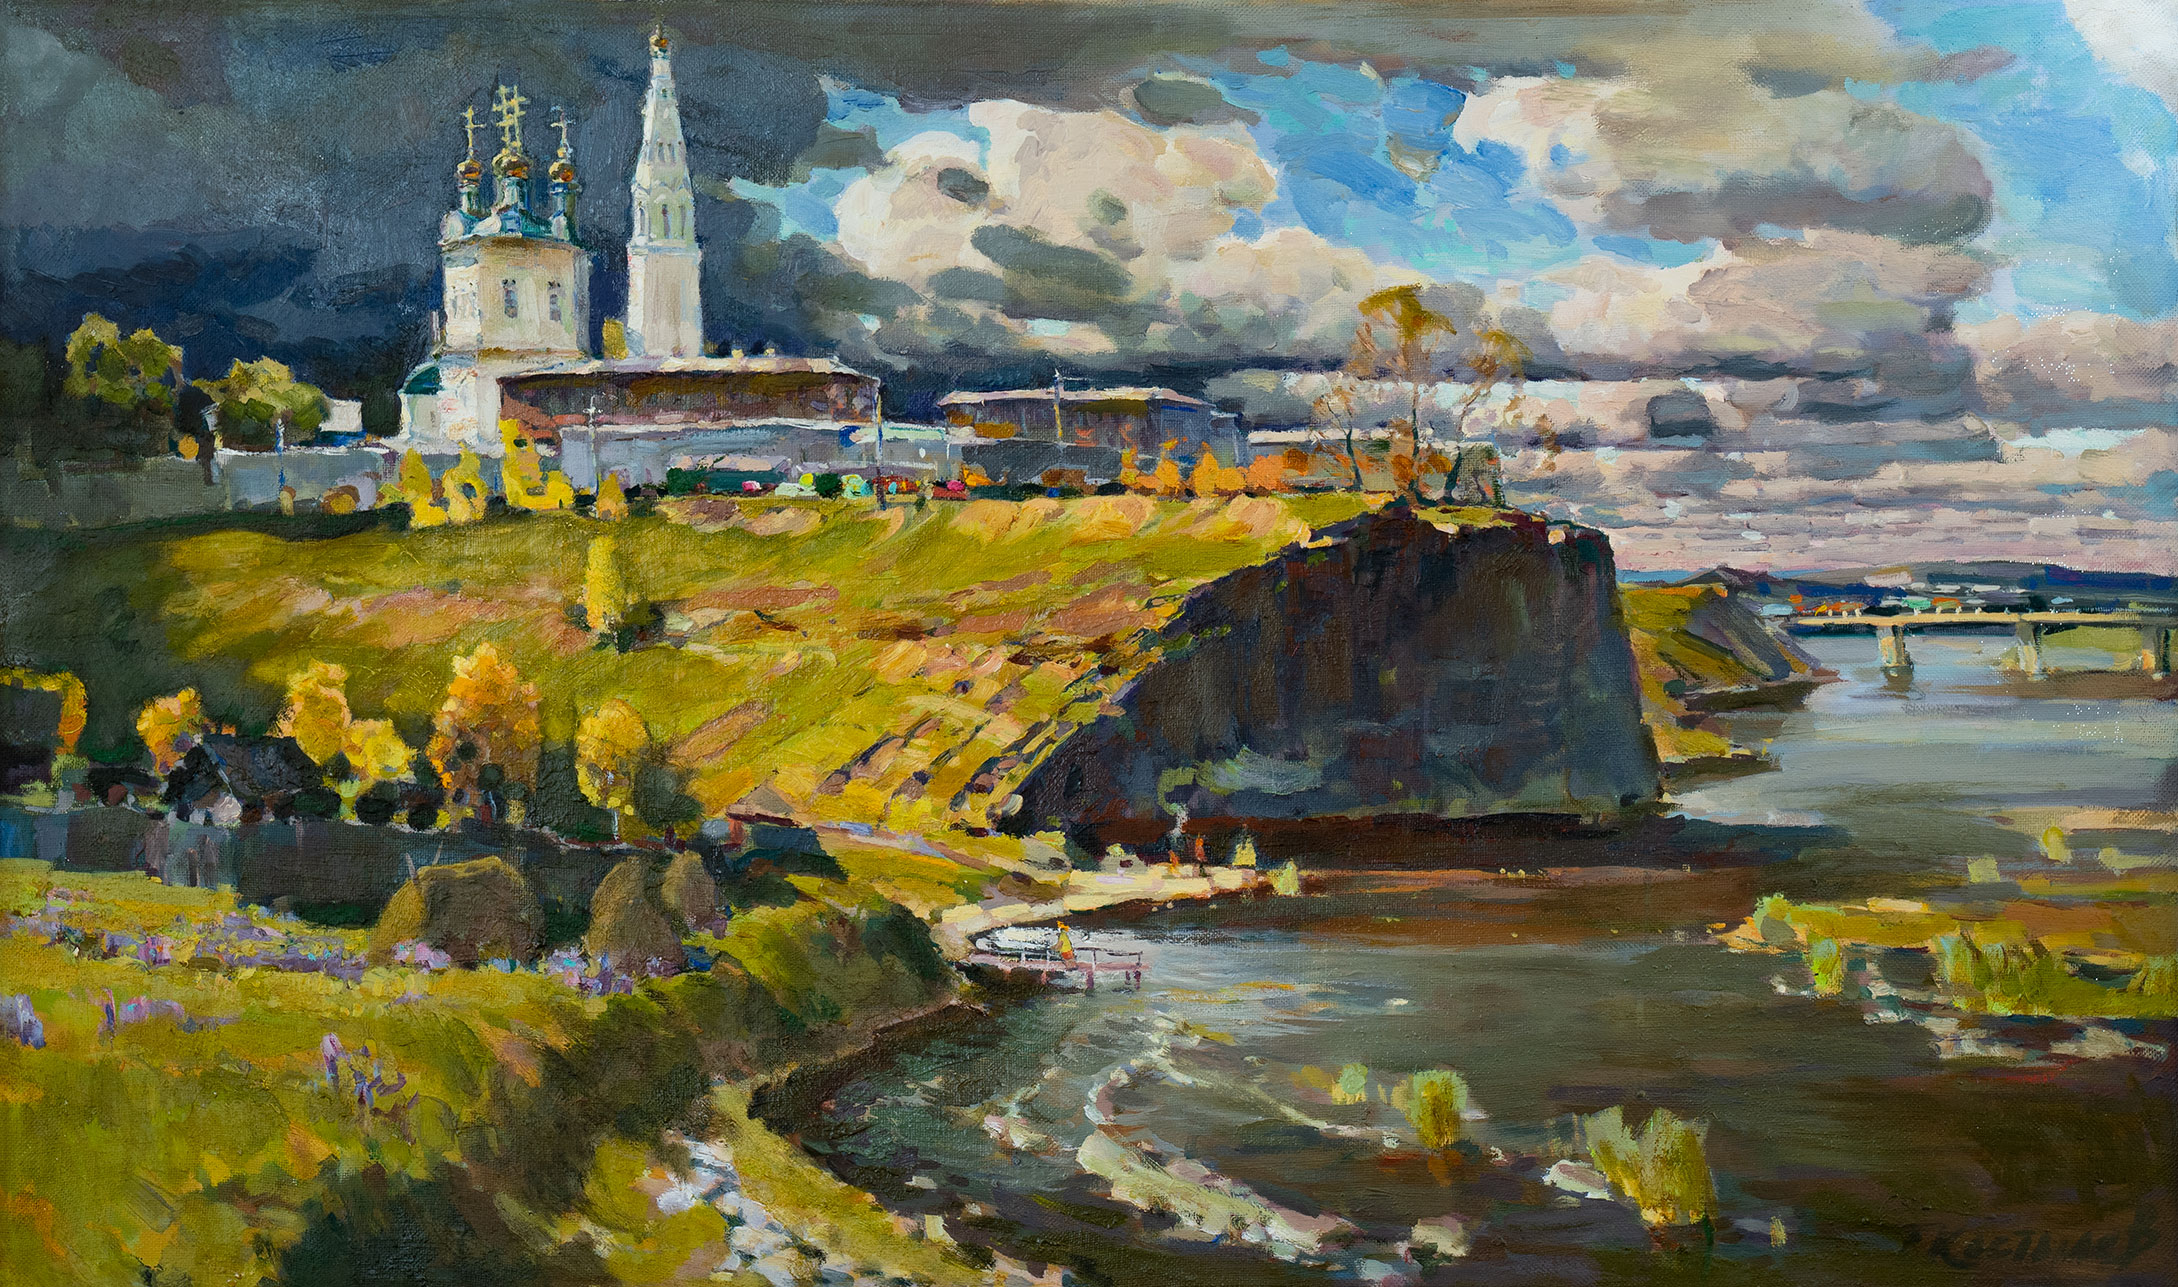 Verkhoturye - 1, Sergey Kostylev, Buy the painting Oil